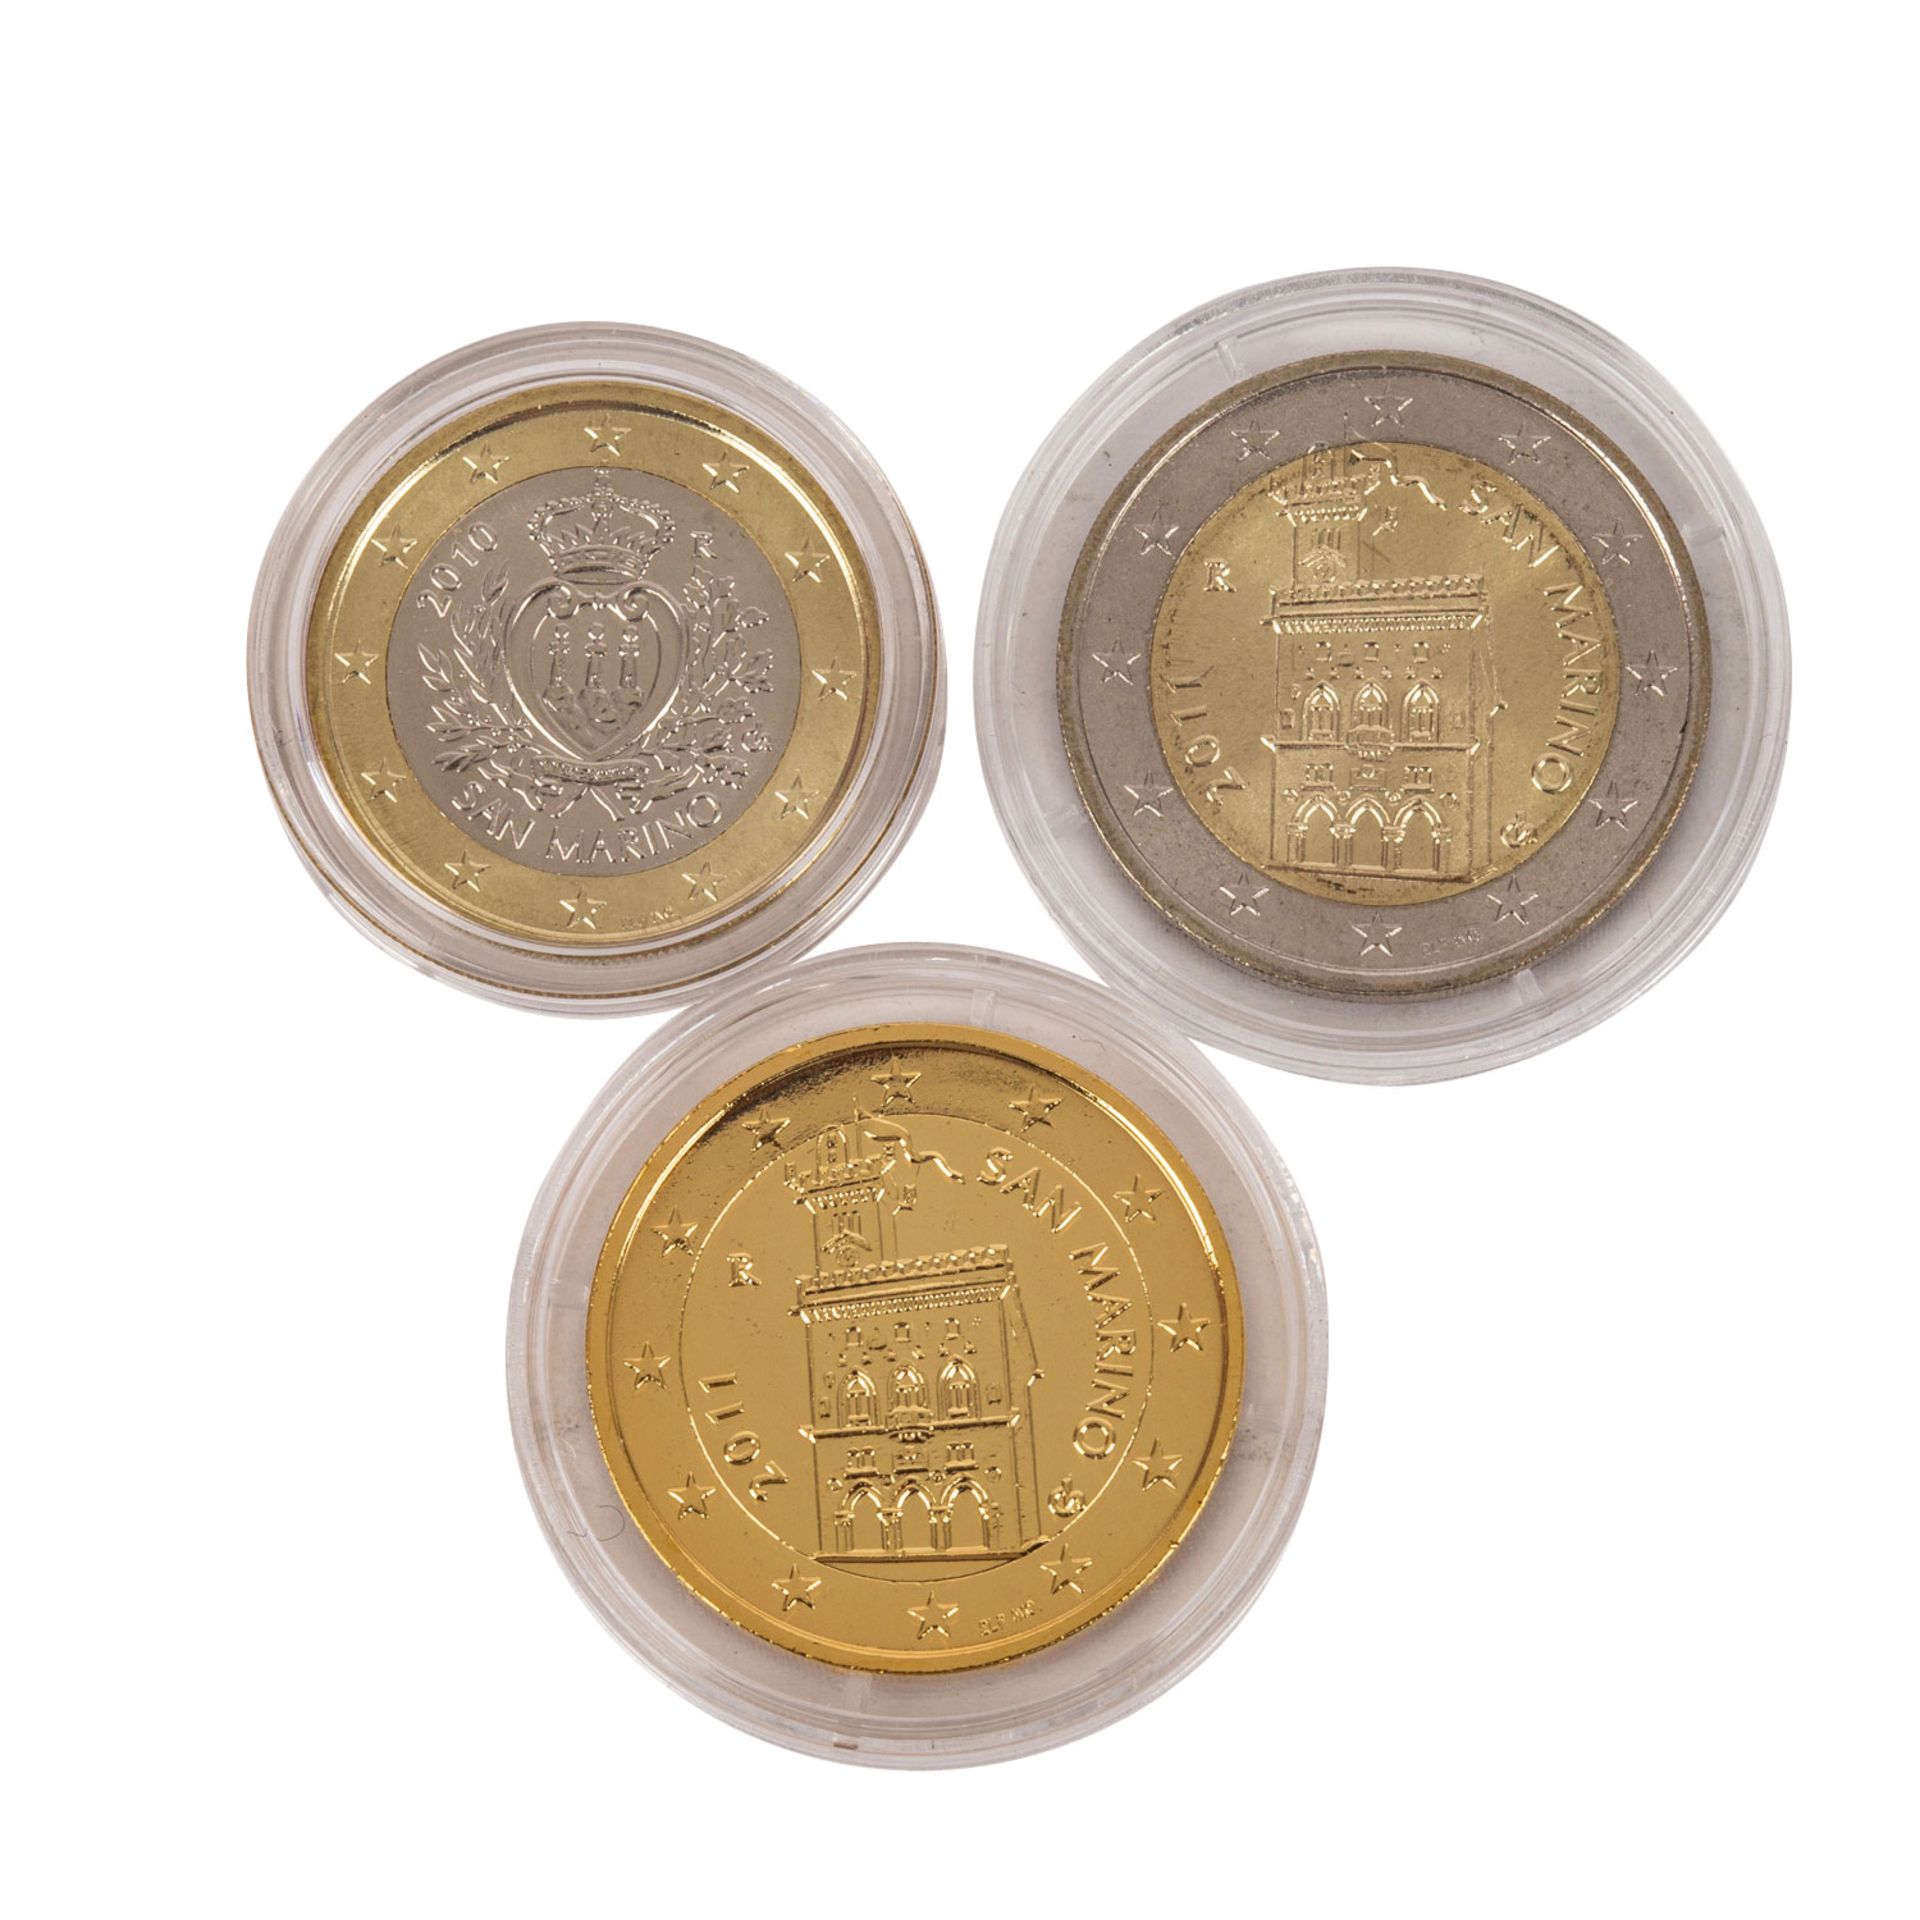 SAN MARINO Euromünzen 2x 2€, 2011, stgl, gekapselt; 1x 1€, 2010, stgl., gekapselt, mit Zertifikaten